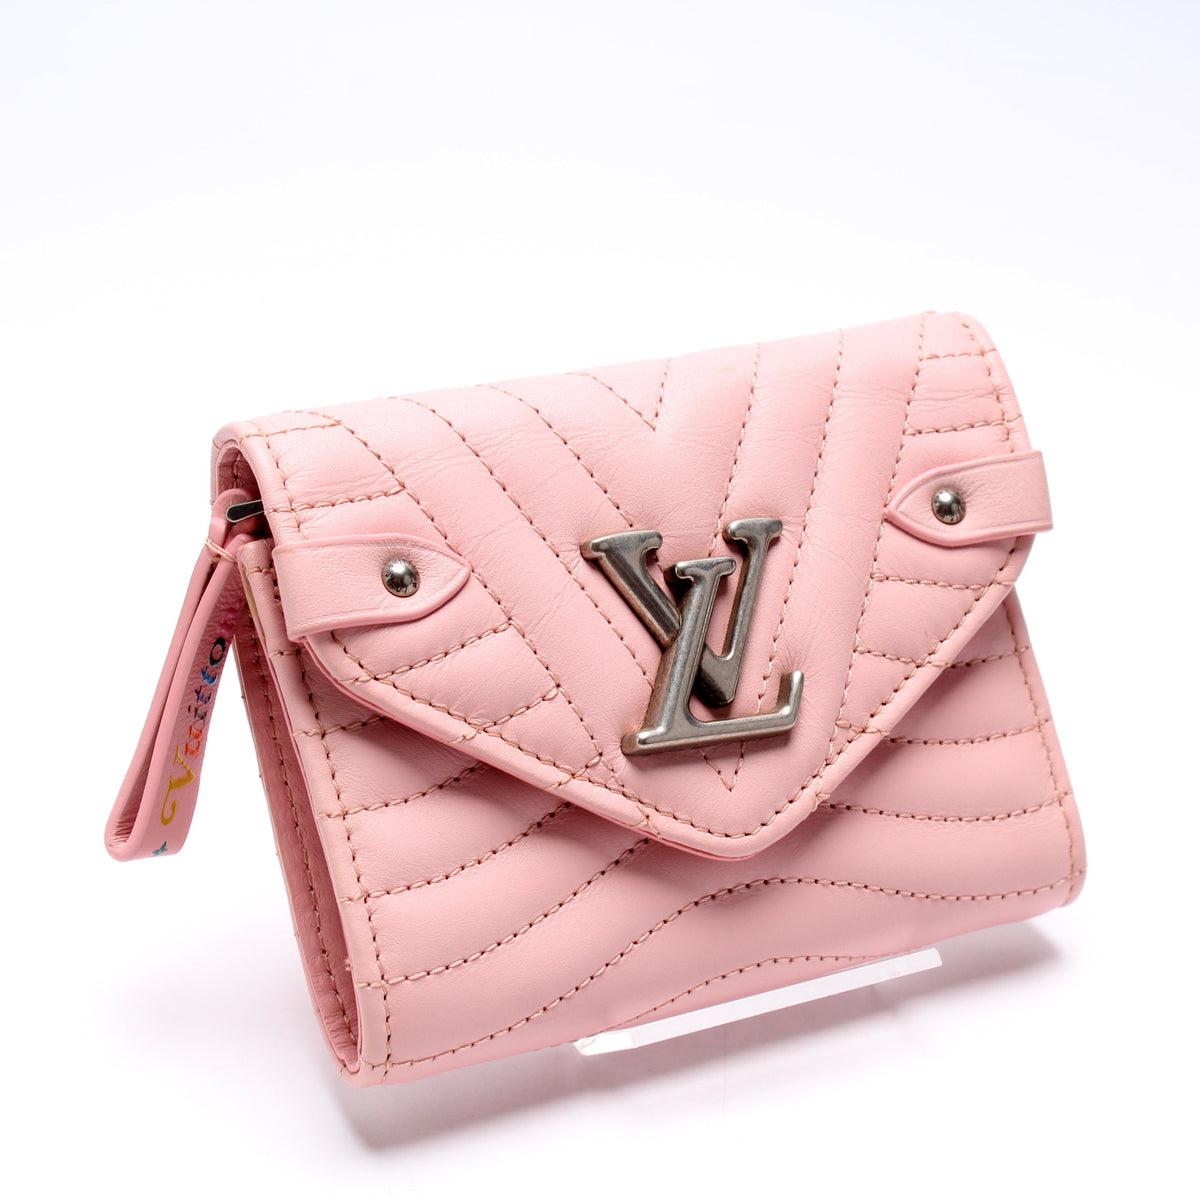 LOUIS VUITTON New Wave Compact Wallet Light Pink Leather M63729 Women